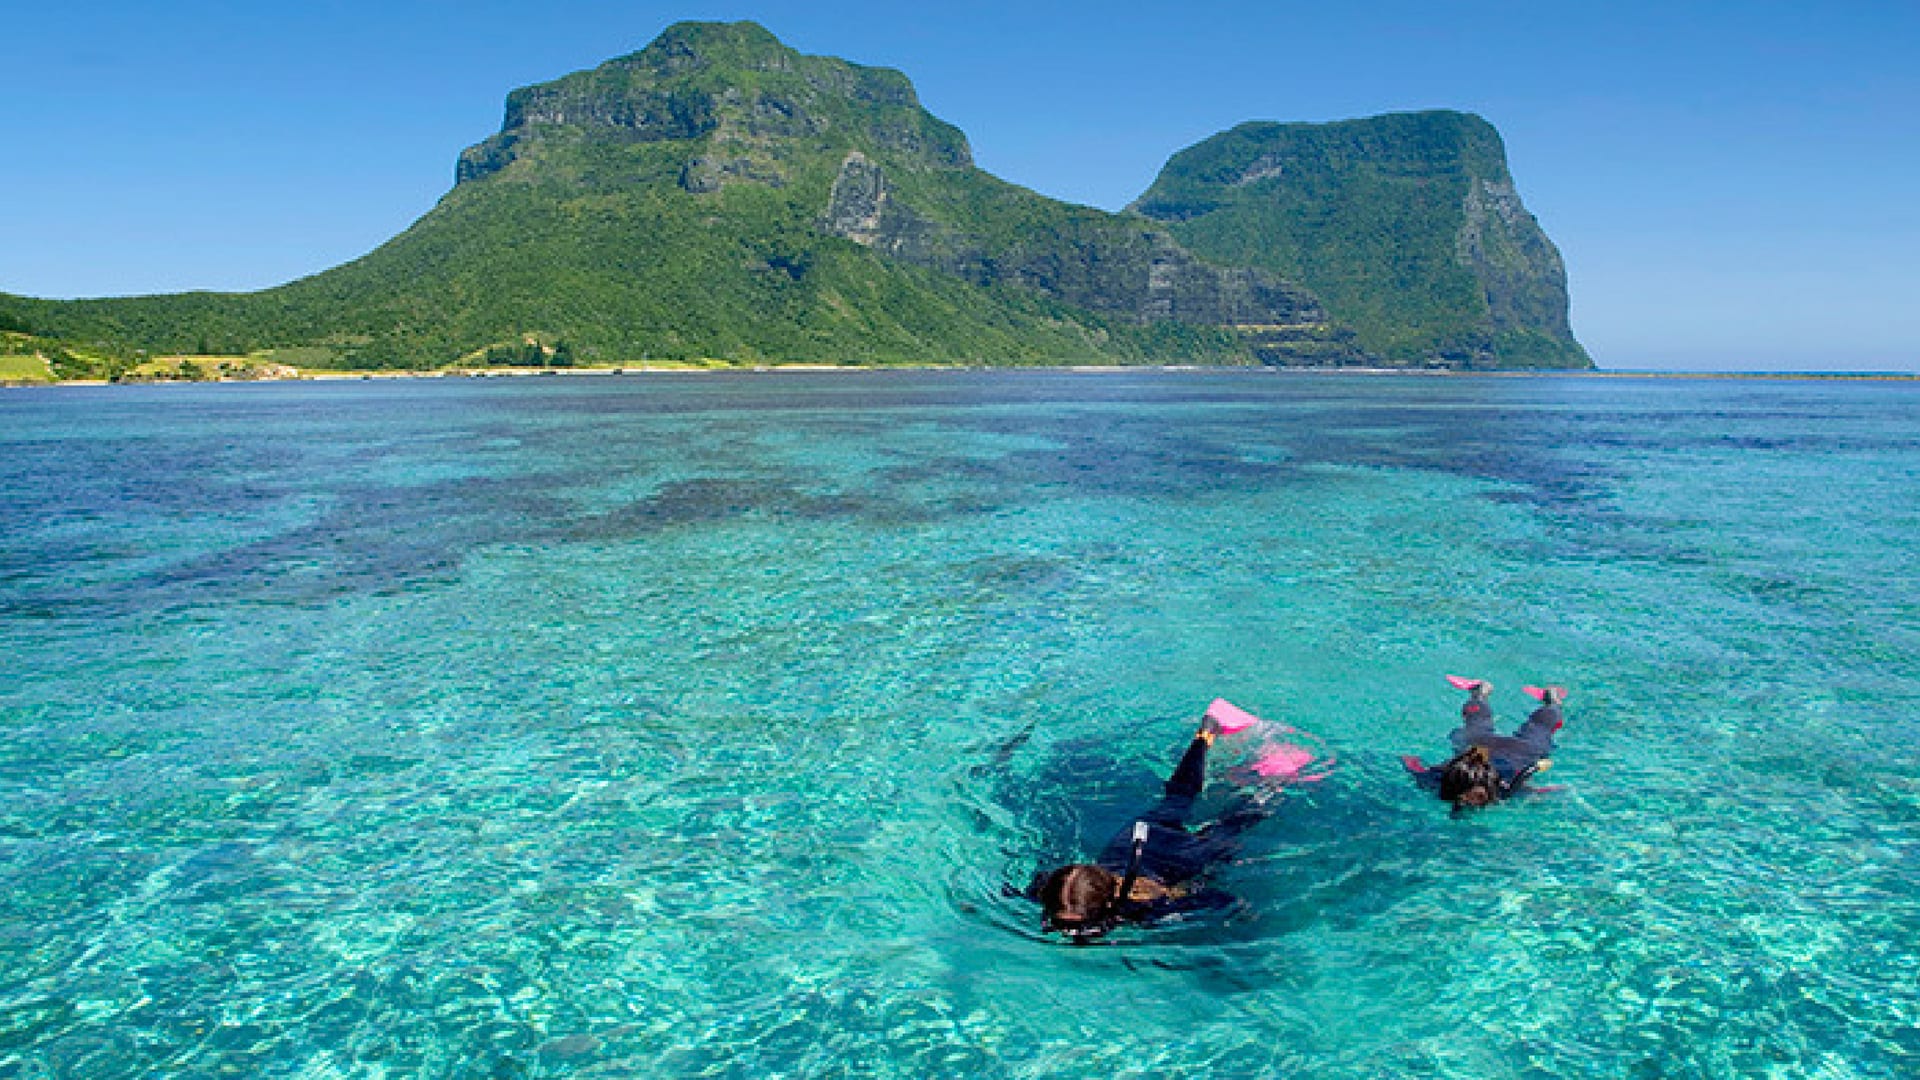 Snorkelling around Lord Howe island